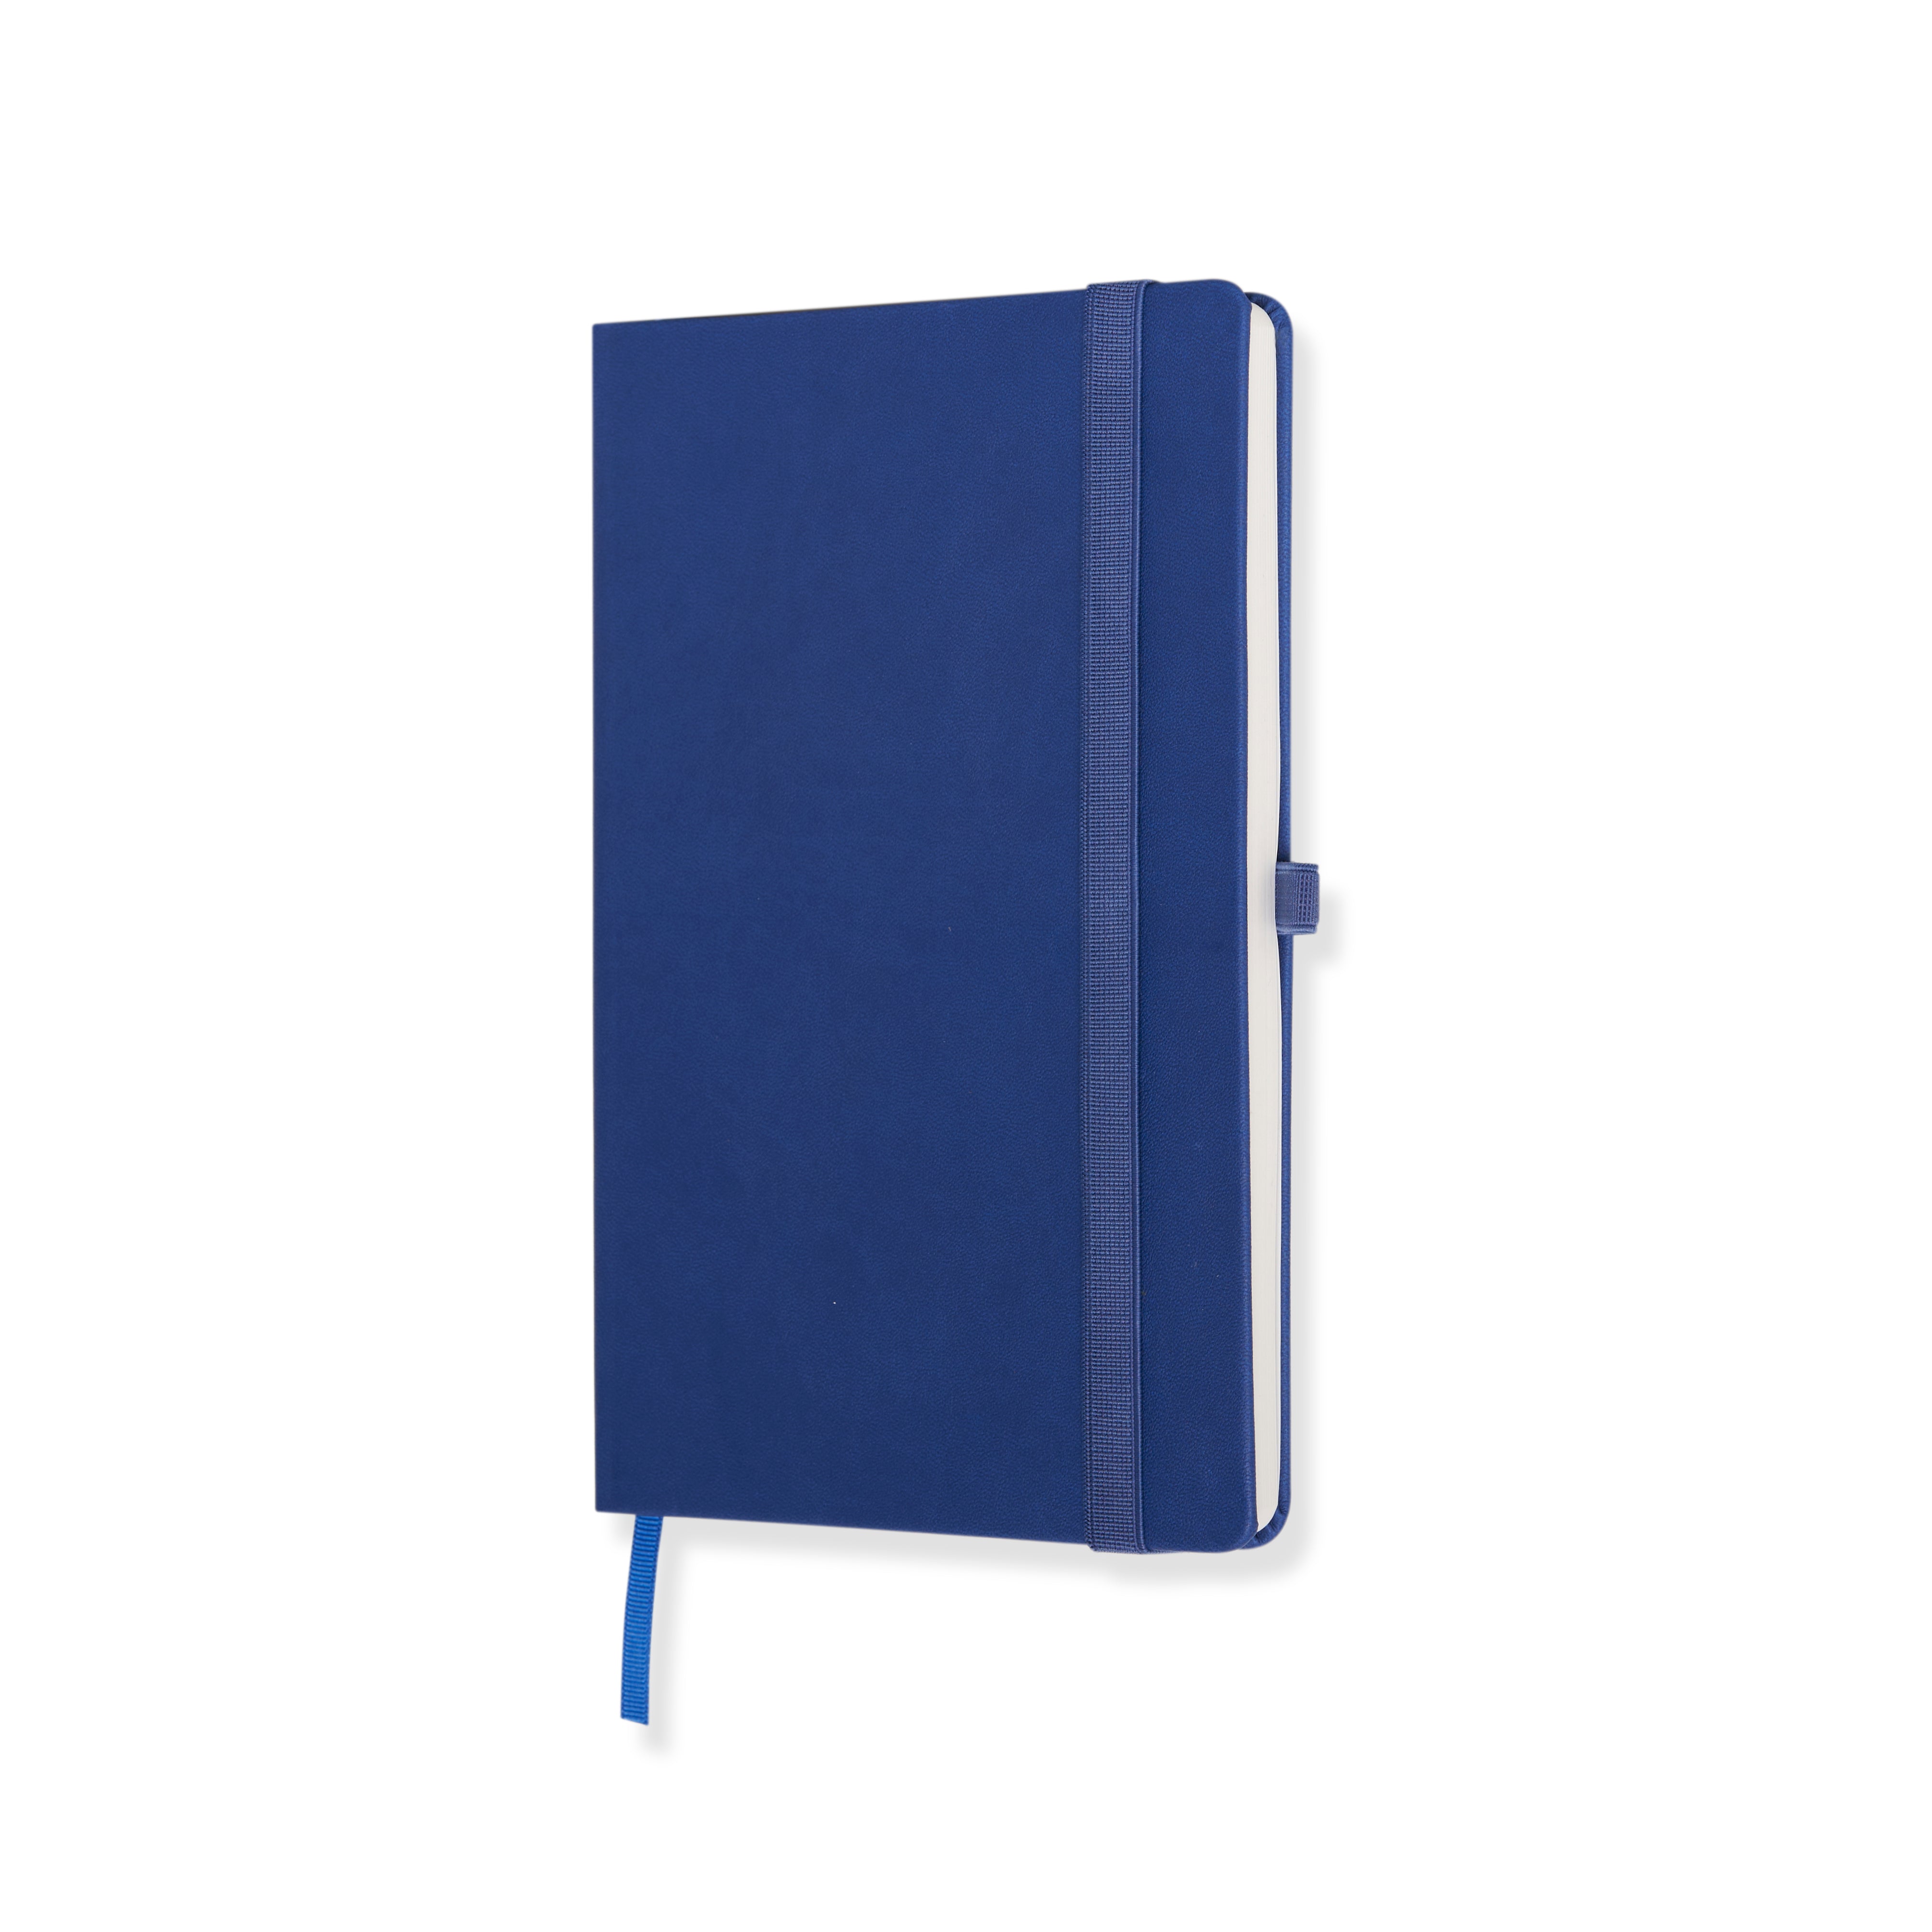 Apex Executive A5 PU Leather Hardbound Diary - Blue